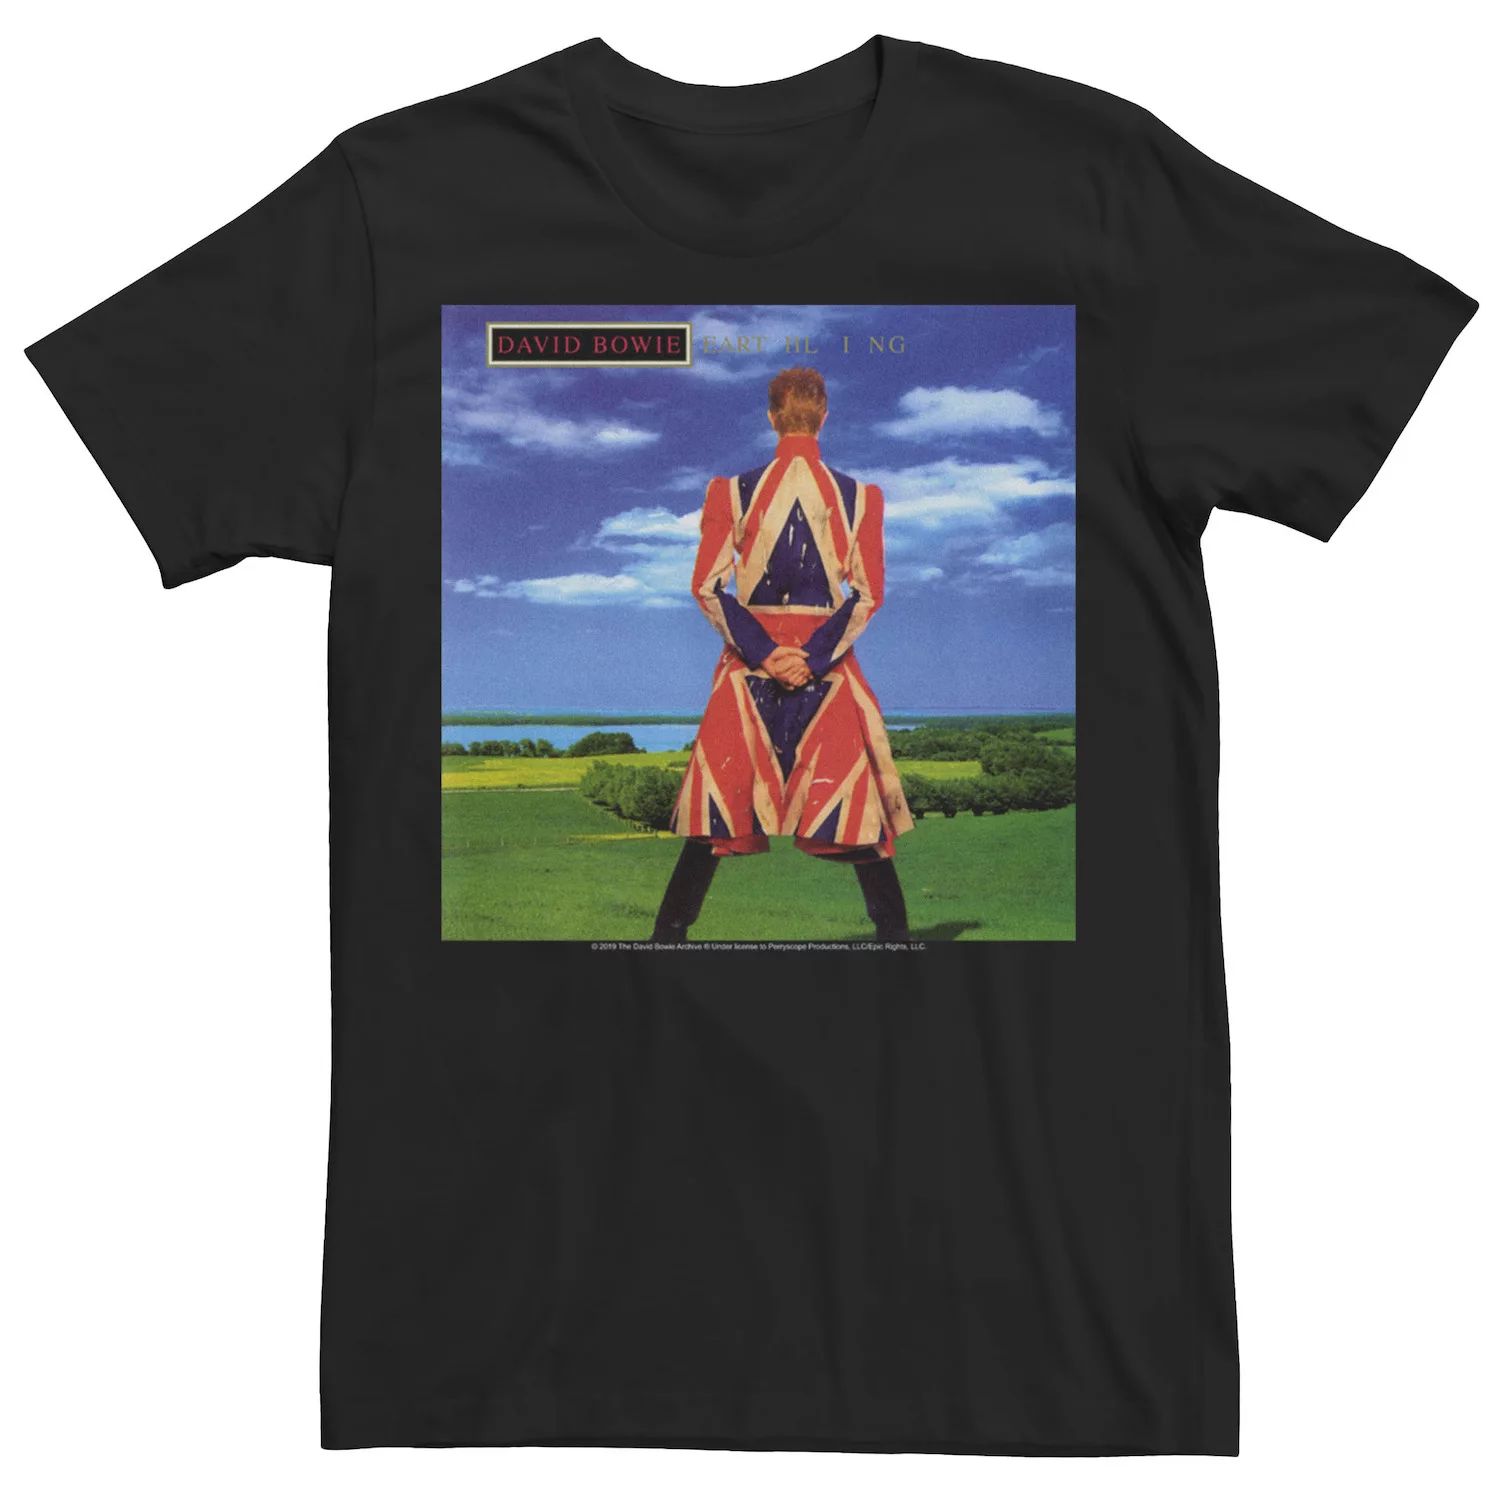 Мужская футболка с рисунком David Bowies Bowie Earthling Licensed Character bowie david earthling 2lp спрей для очистки lp с микрофиброй 250мл набор